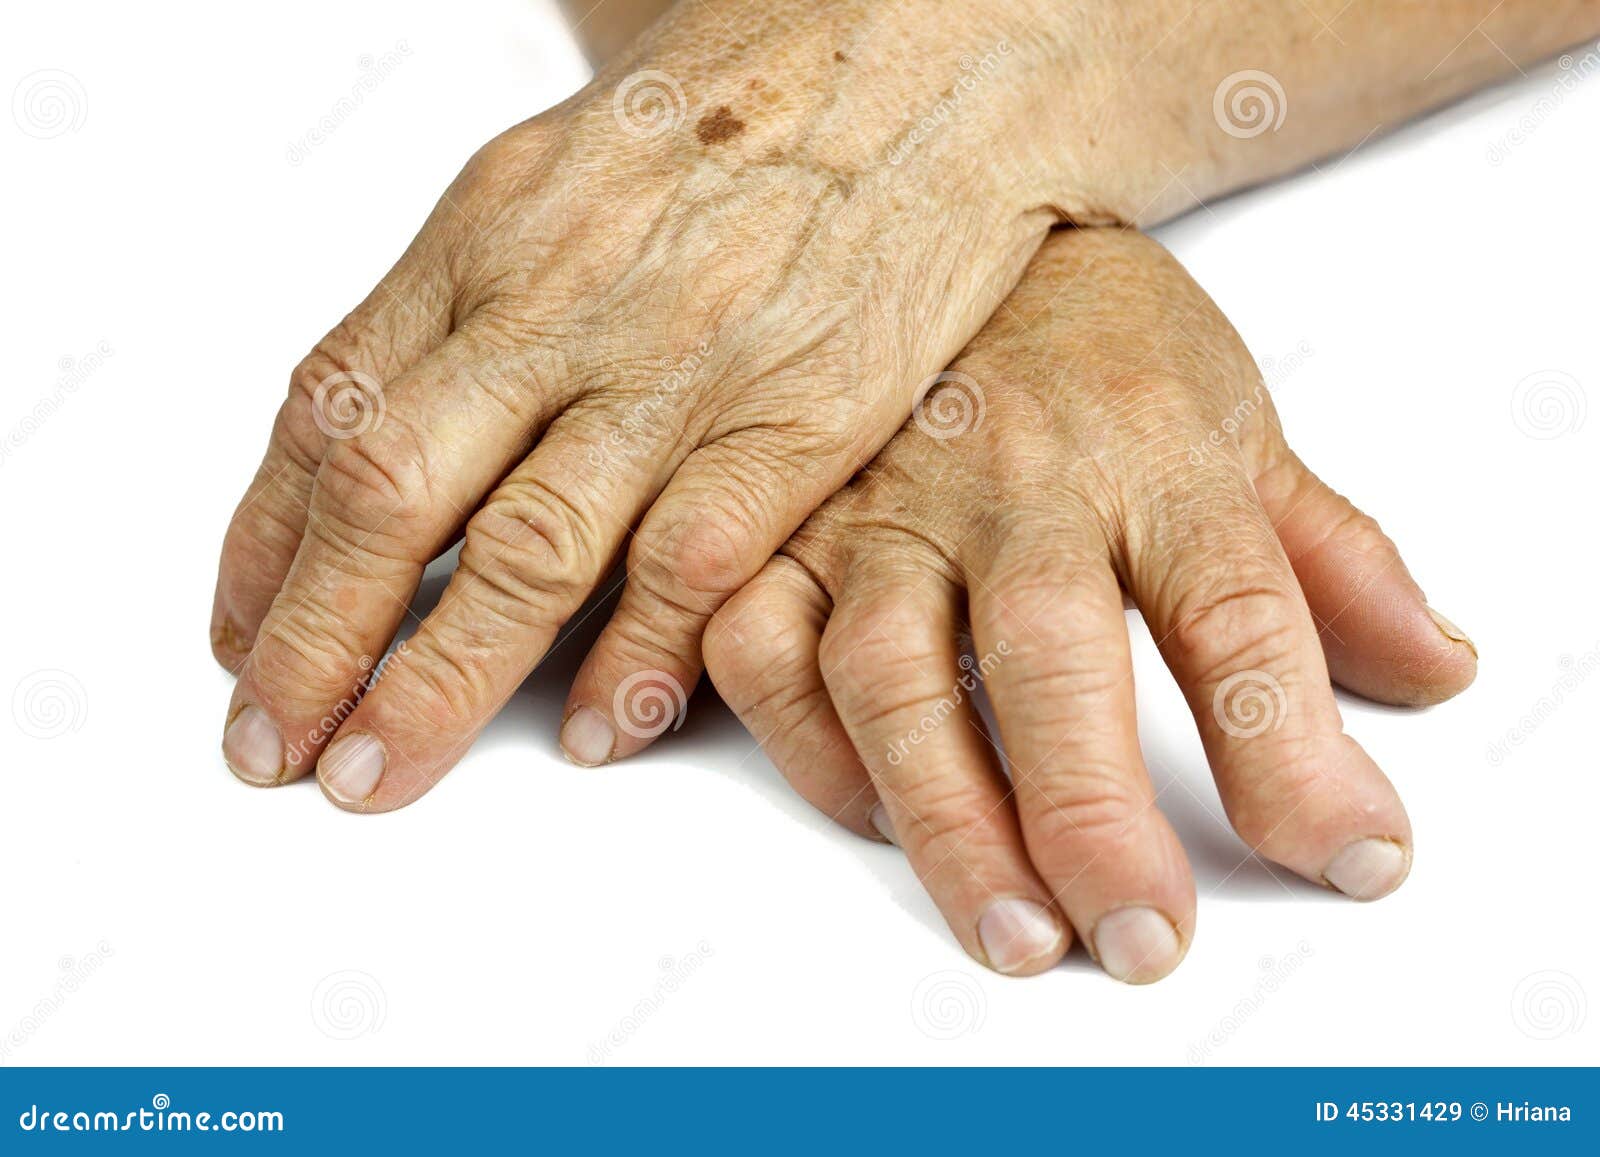 Остеоартроз пальцев рук